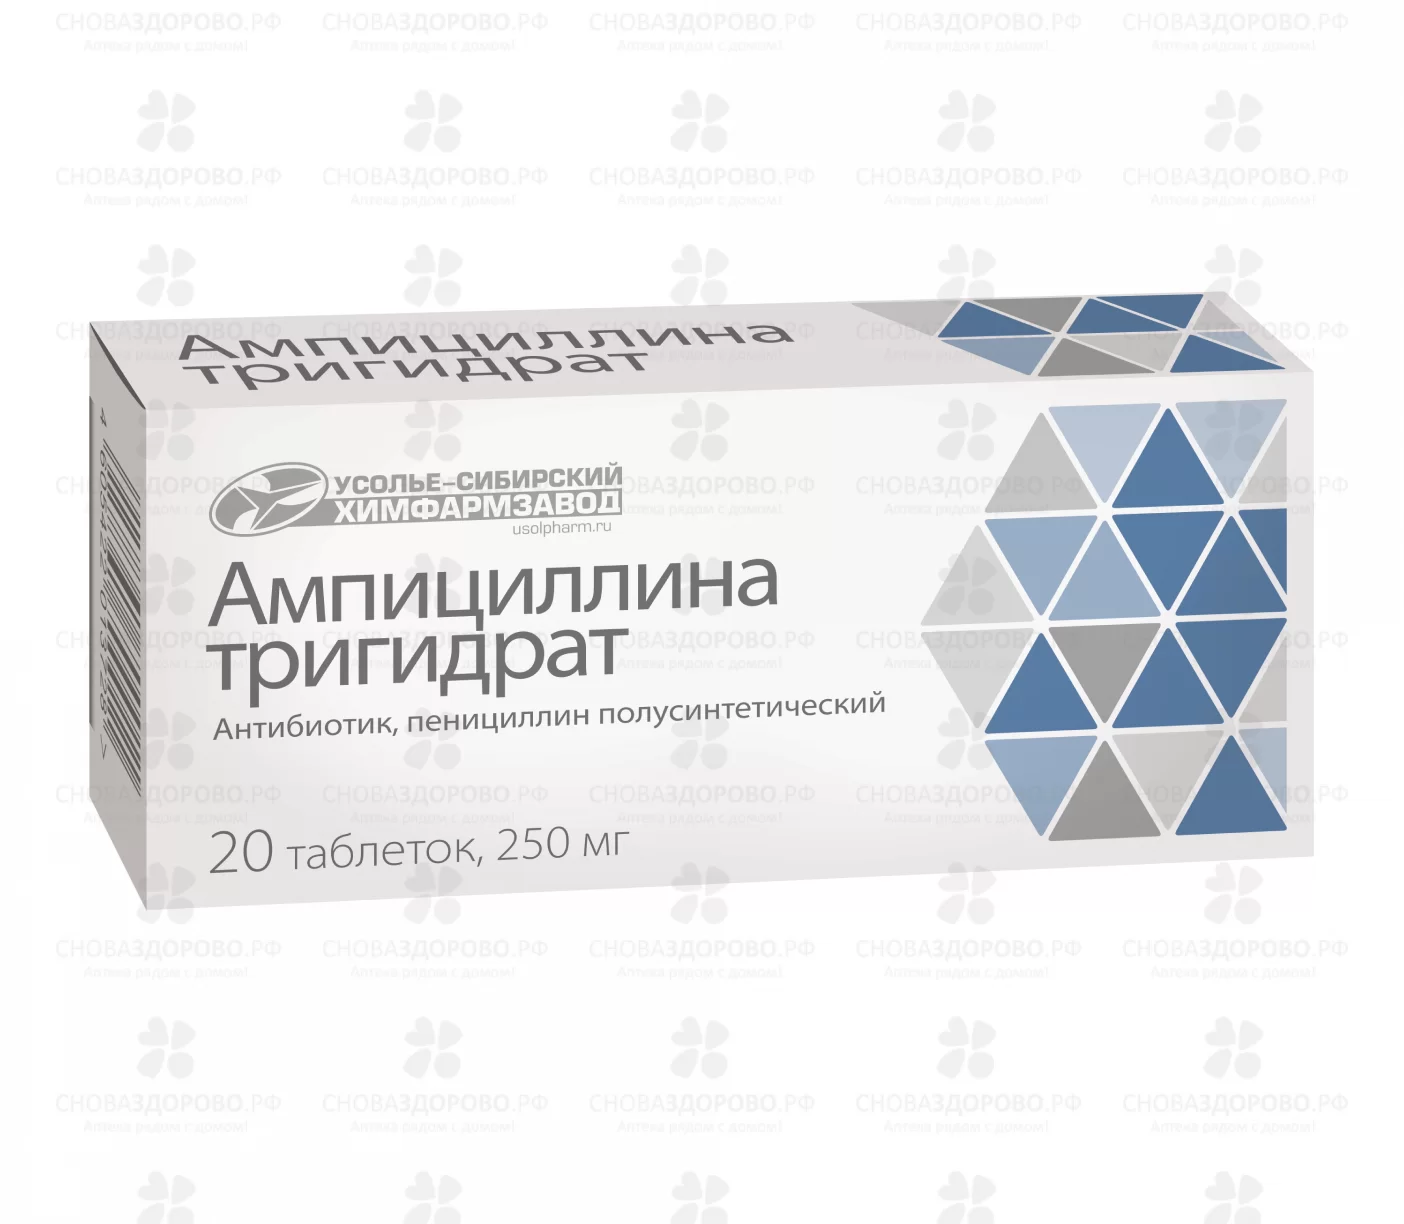 Ампициллина тригидрат таблетки 250мг №20 ✅ 23921/06908 | Сноваздорово.рф